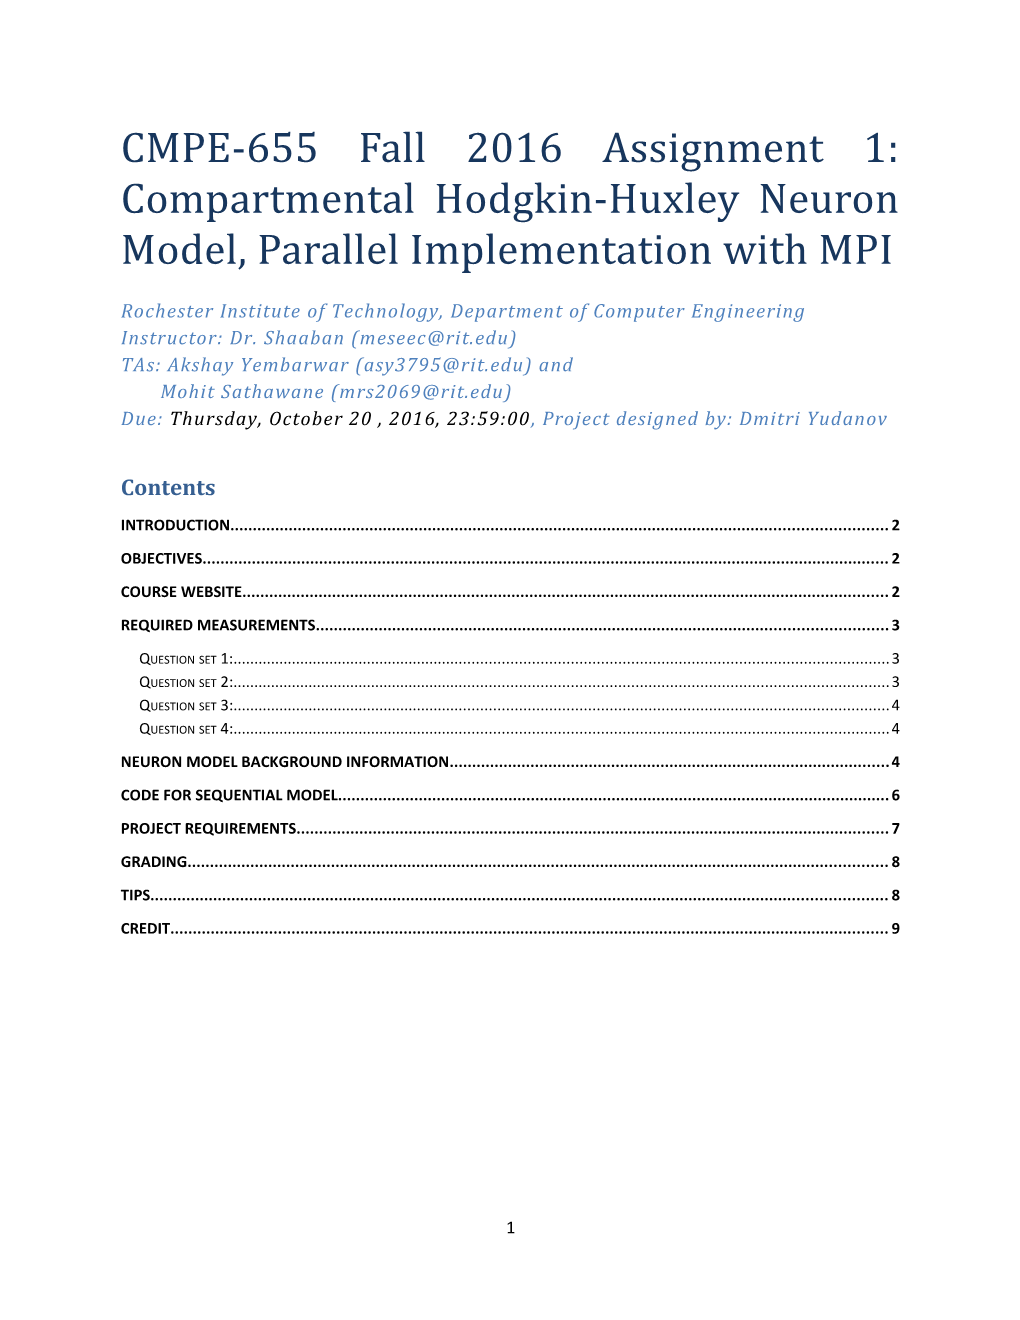 CMPE-655 Fall 2016Assignment 1: Compartmental Hodgkin-Huxley Neuron Model, Parallel